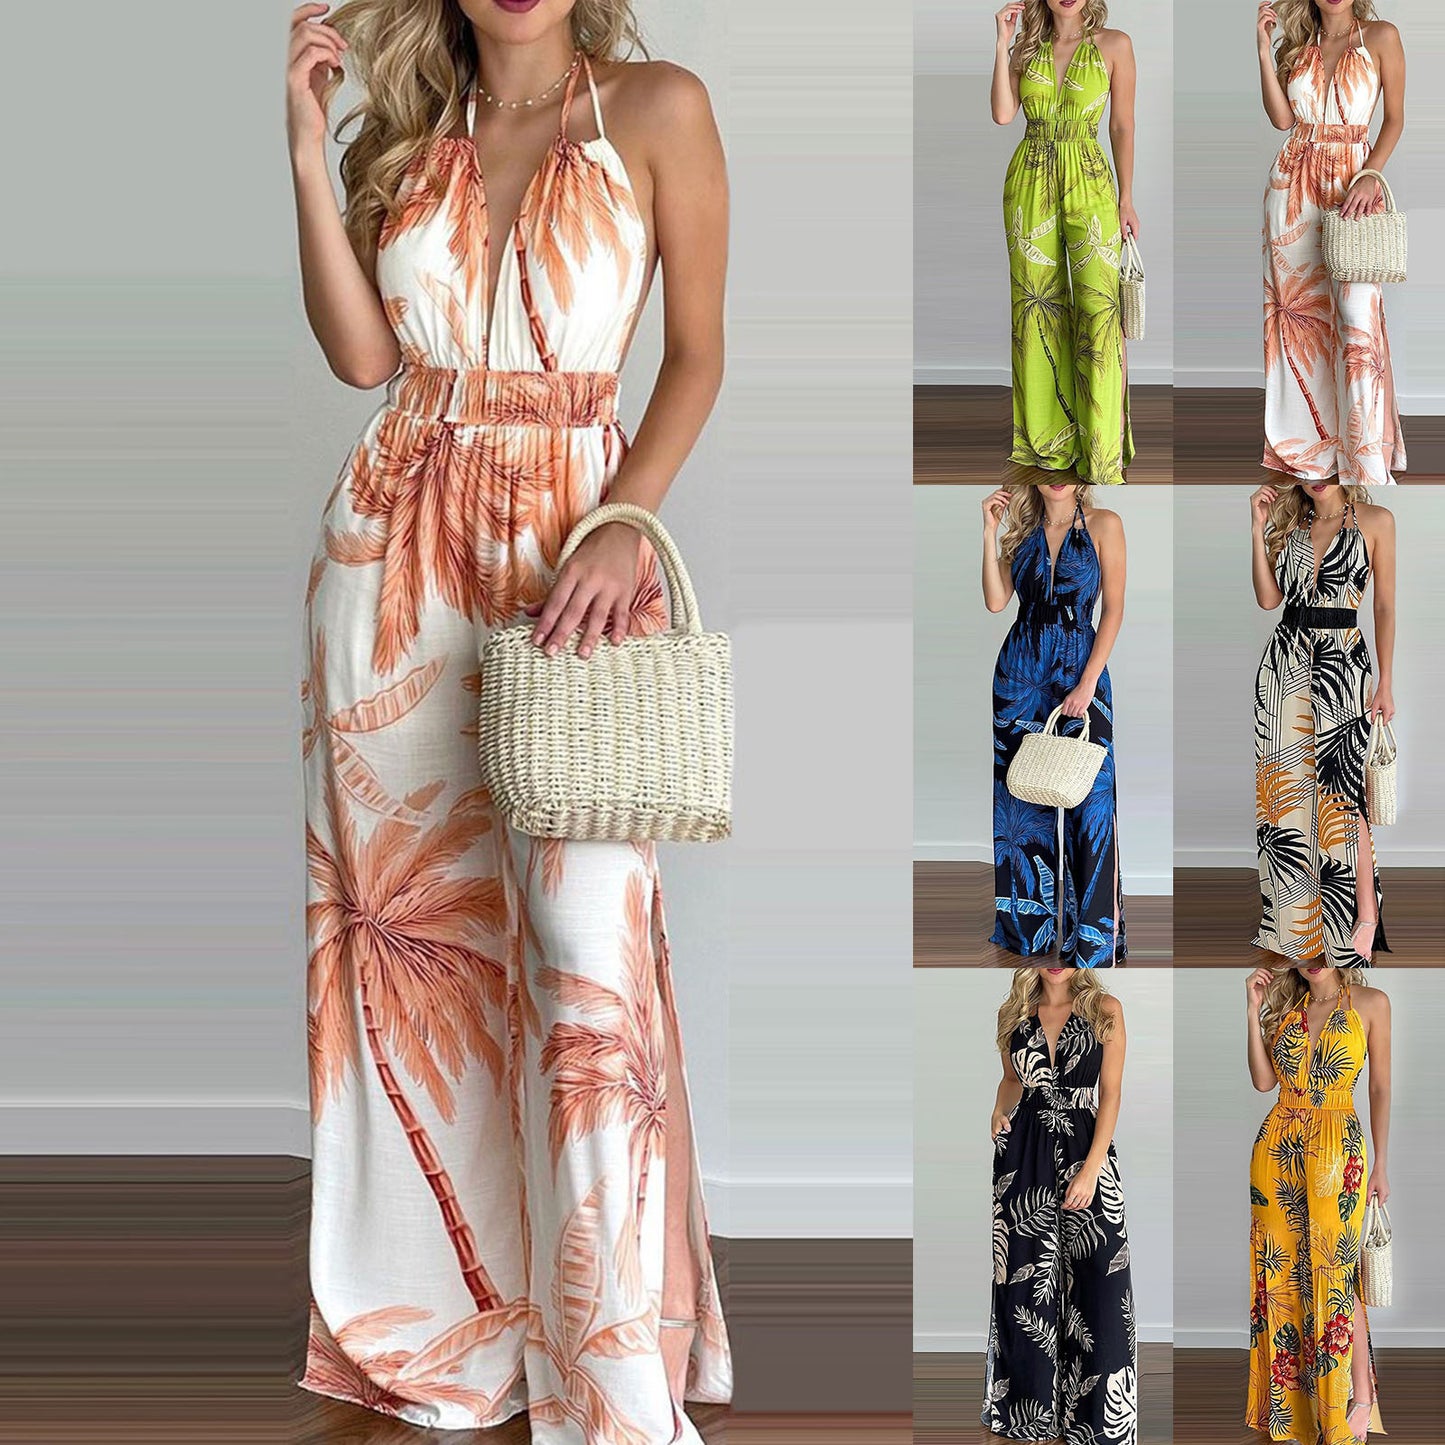 YESFASHION Women's Dress Wish Digital Printing Colorful Jumpsuit